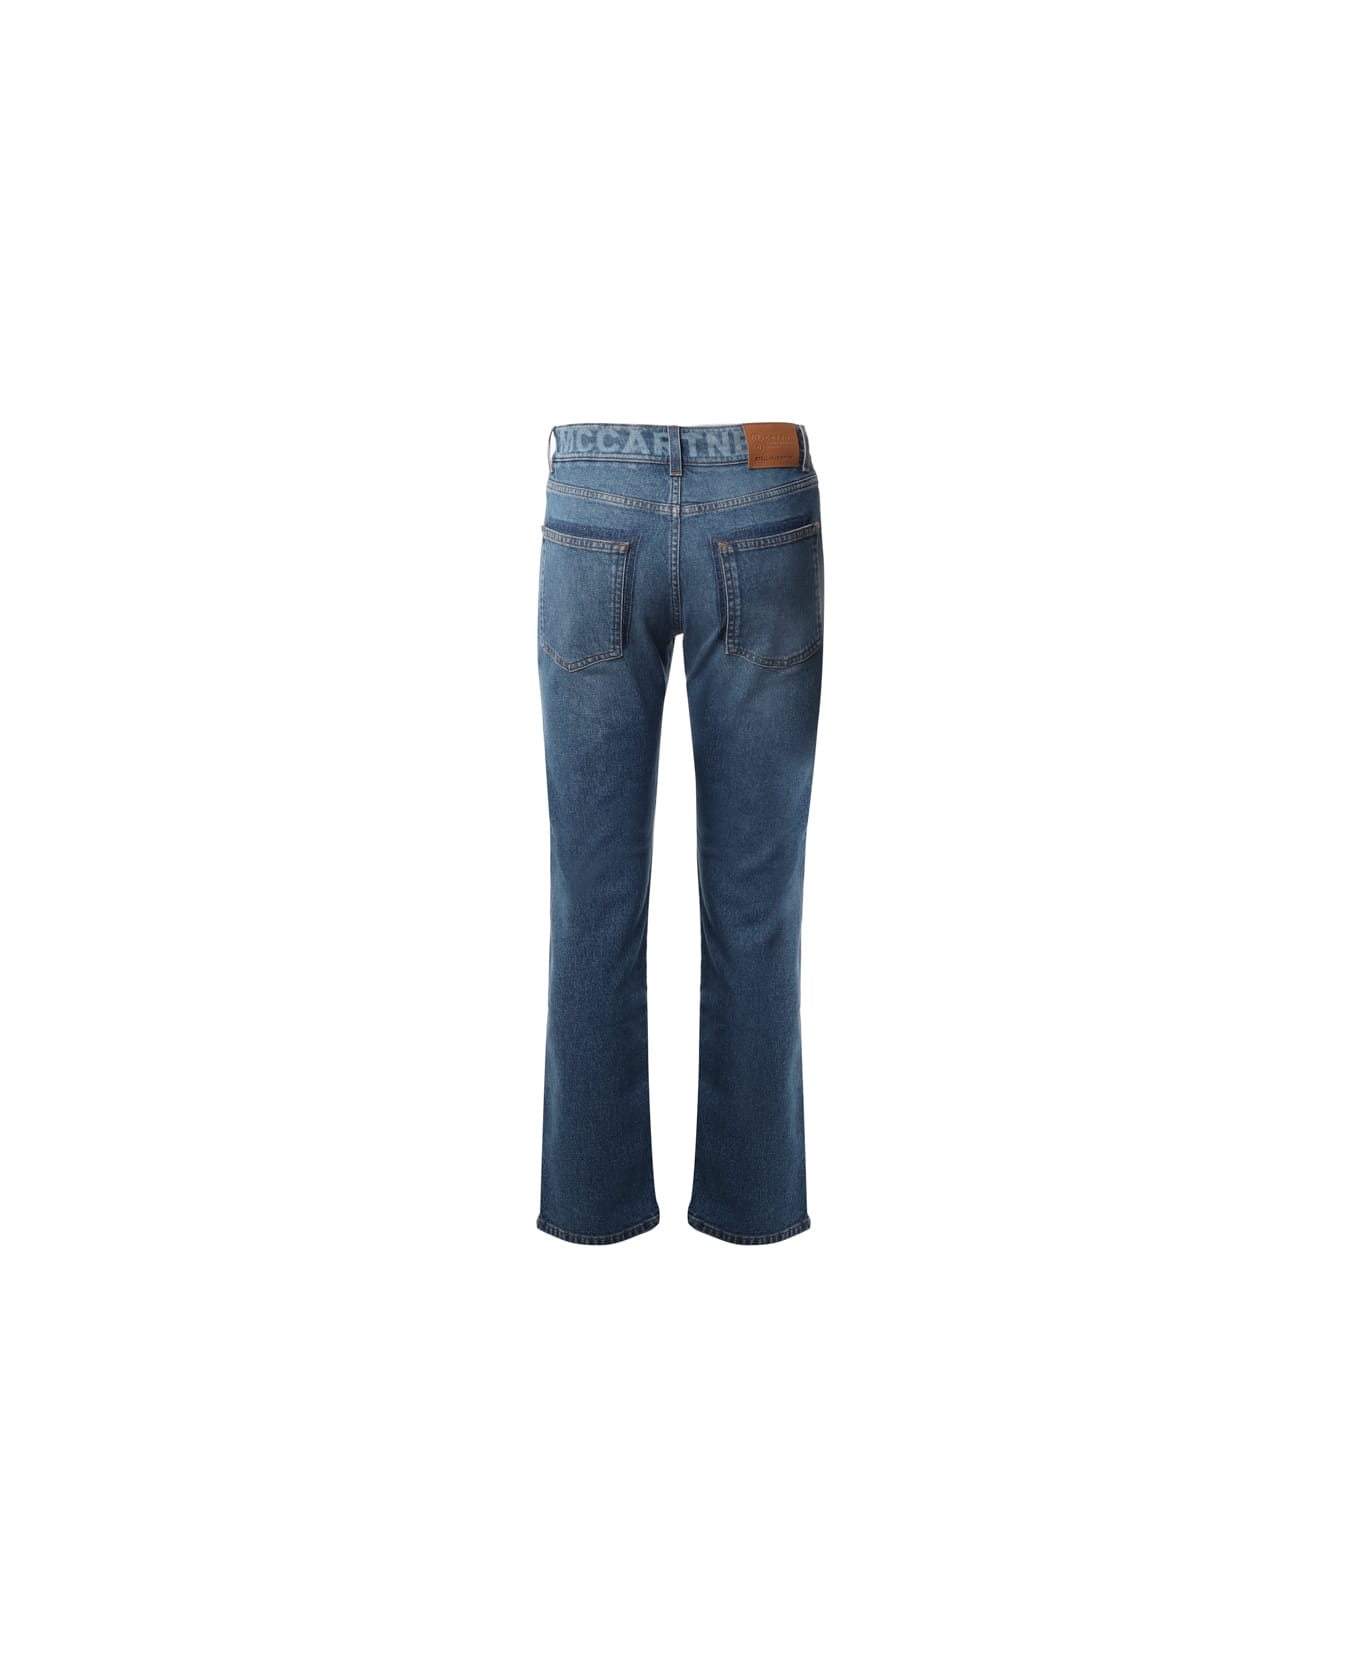 Stella McCartney Flared Jeans In Cotton - Medium blue デニム